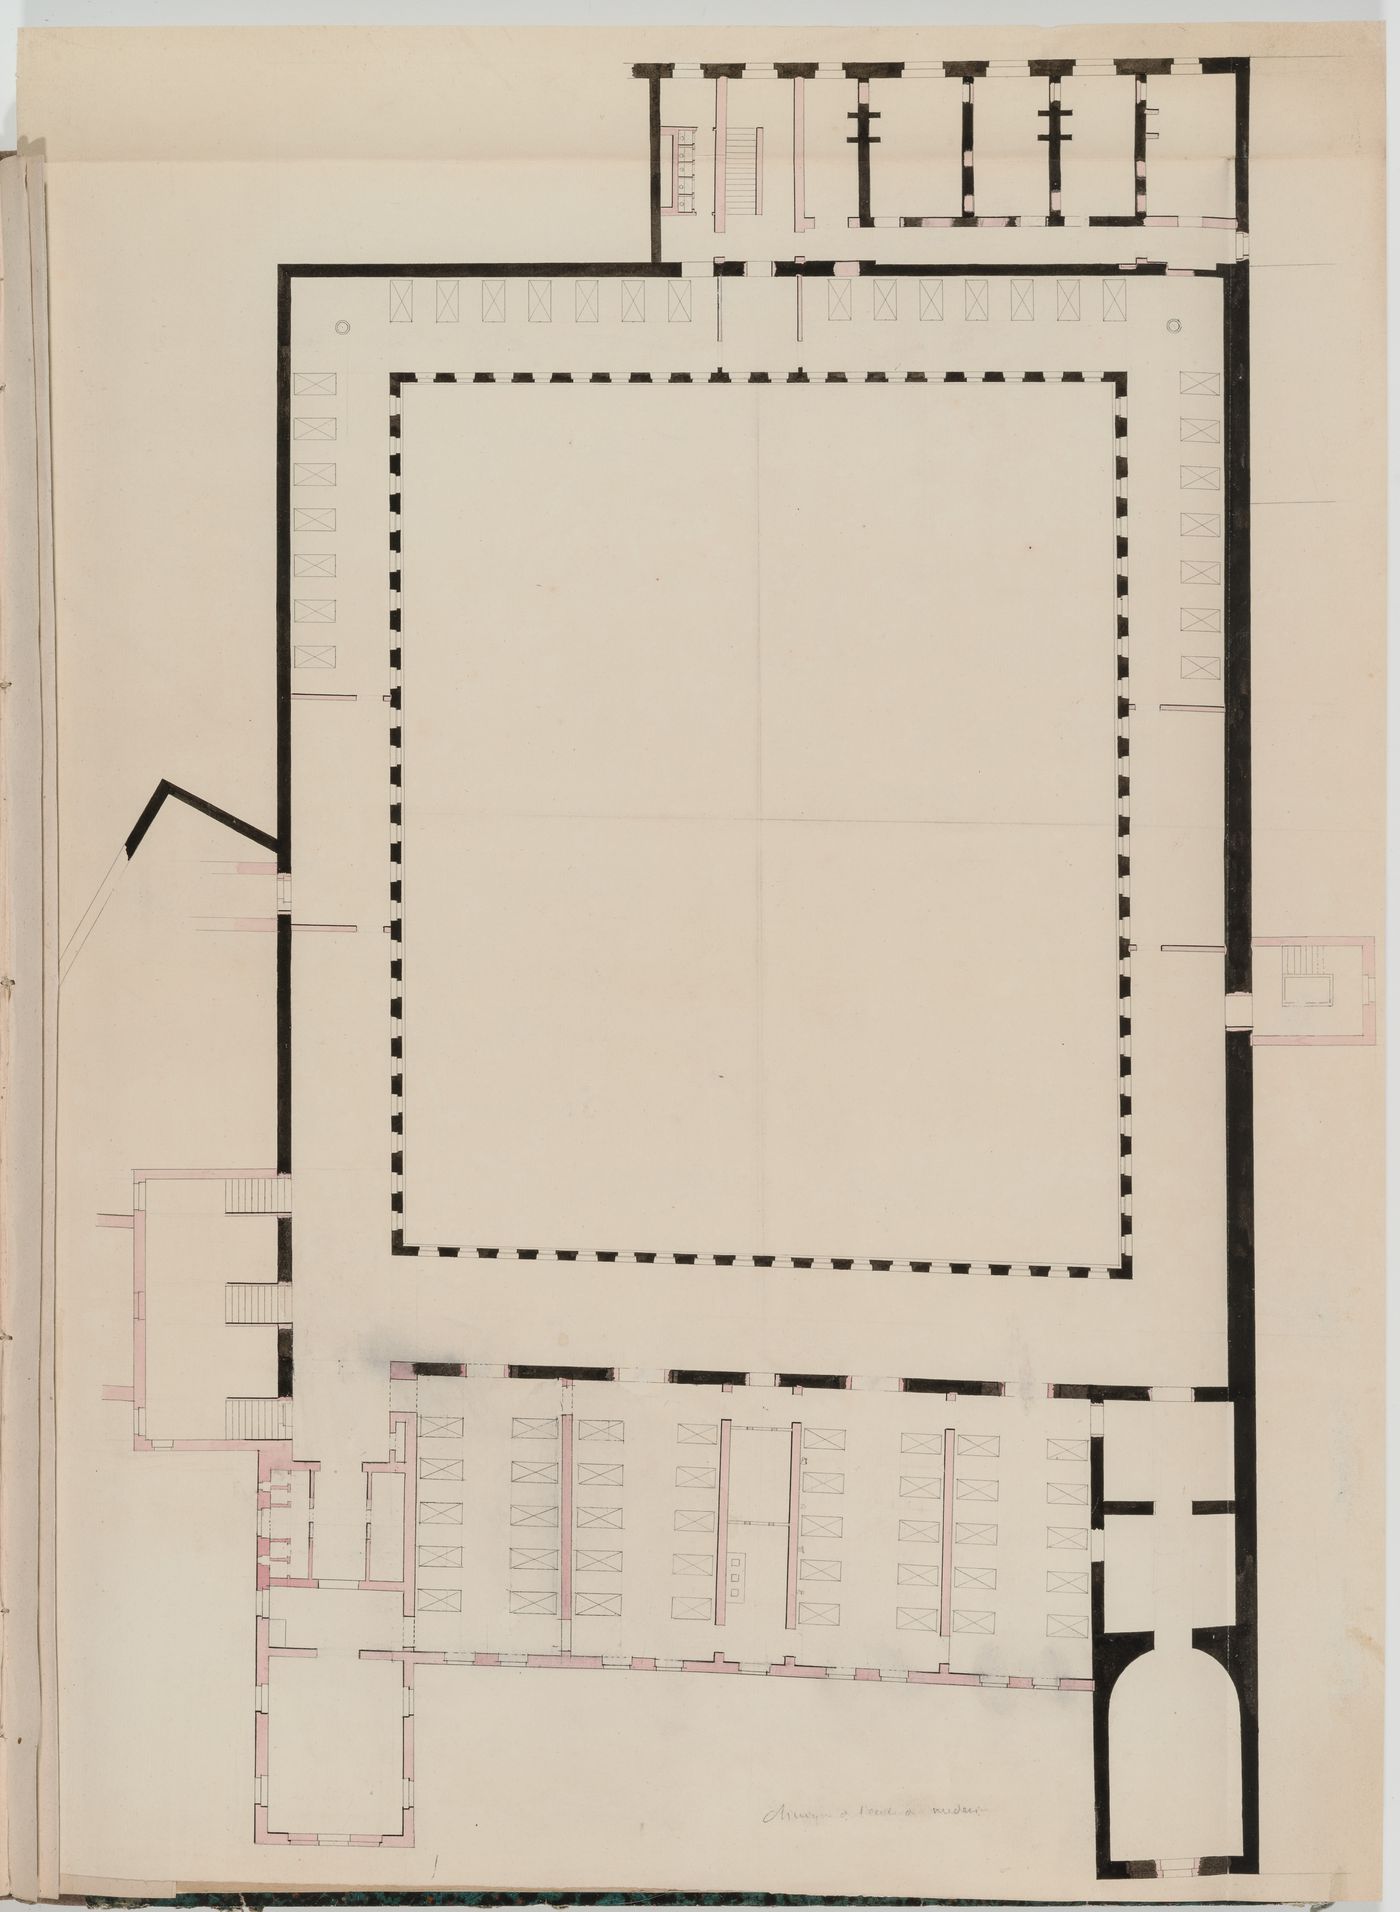 Project for the redevelopment of the École de médecine and surrounding area, Paris: Plan for additions to the Clinique de l'École de médecine